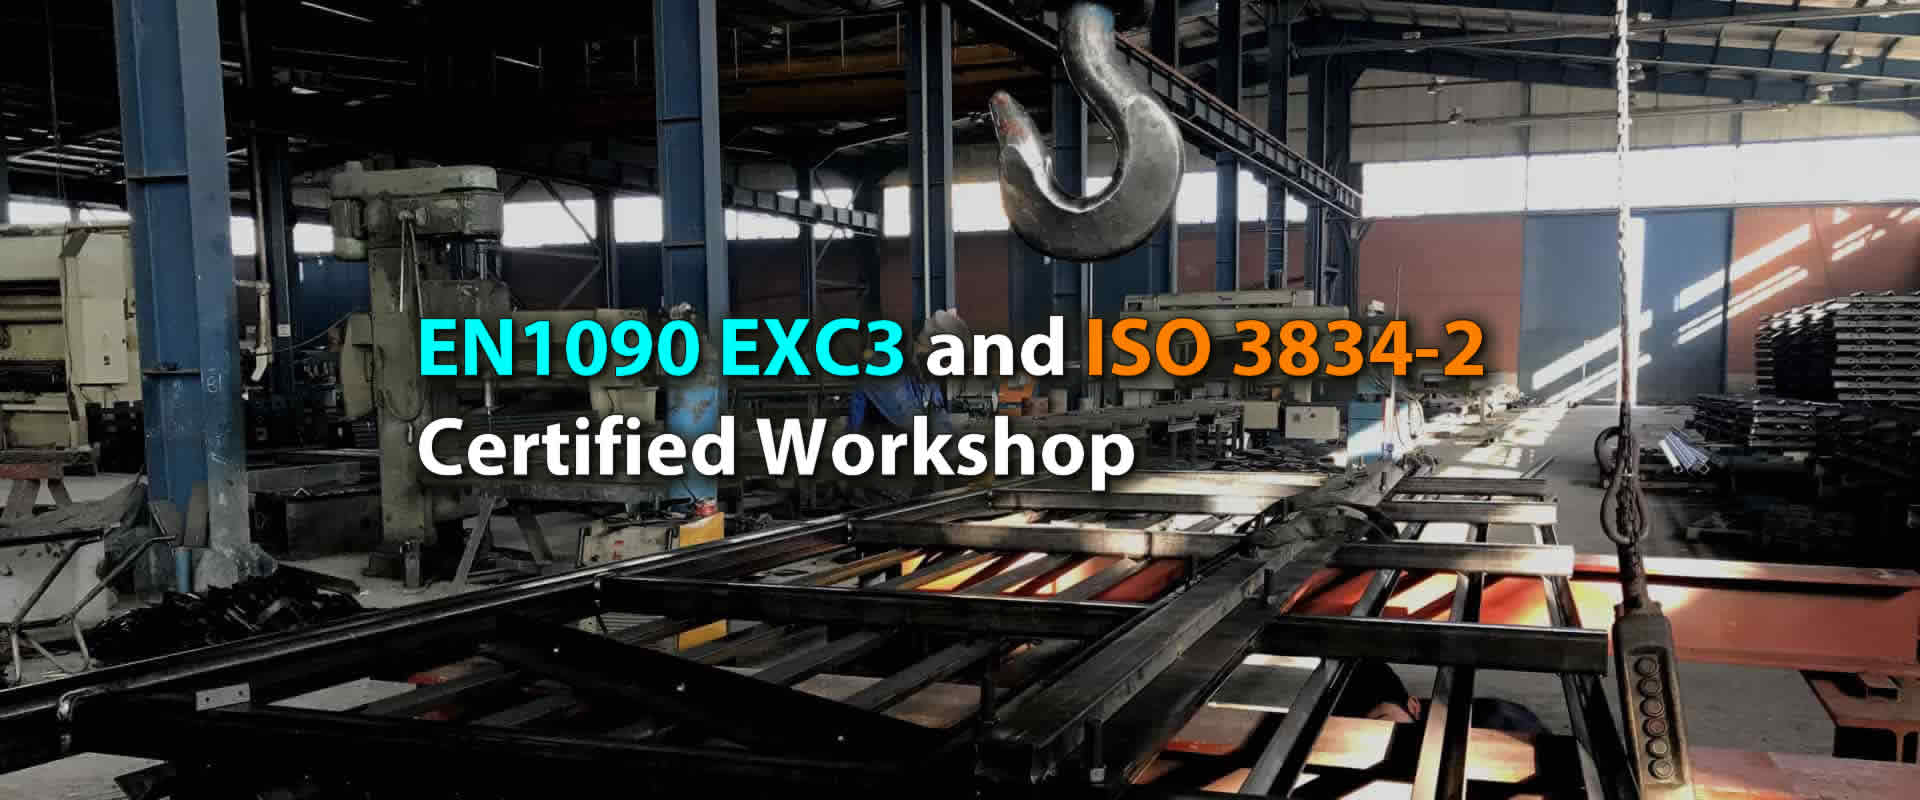 EN1090 EXC3 and ISO 3834-2 Certified Workshop